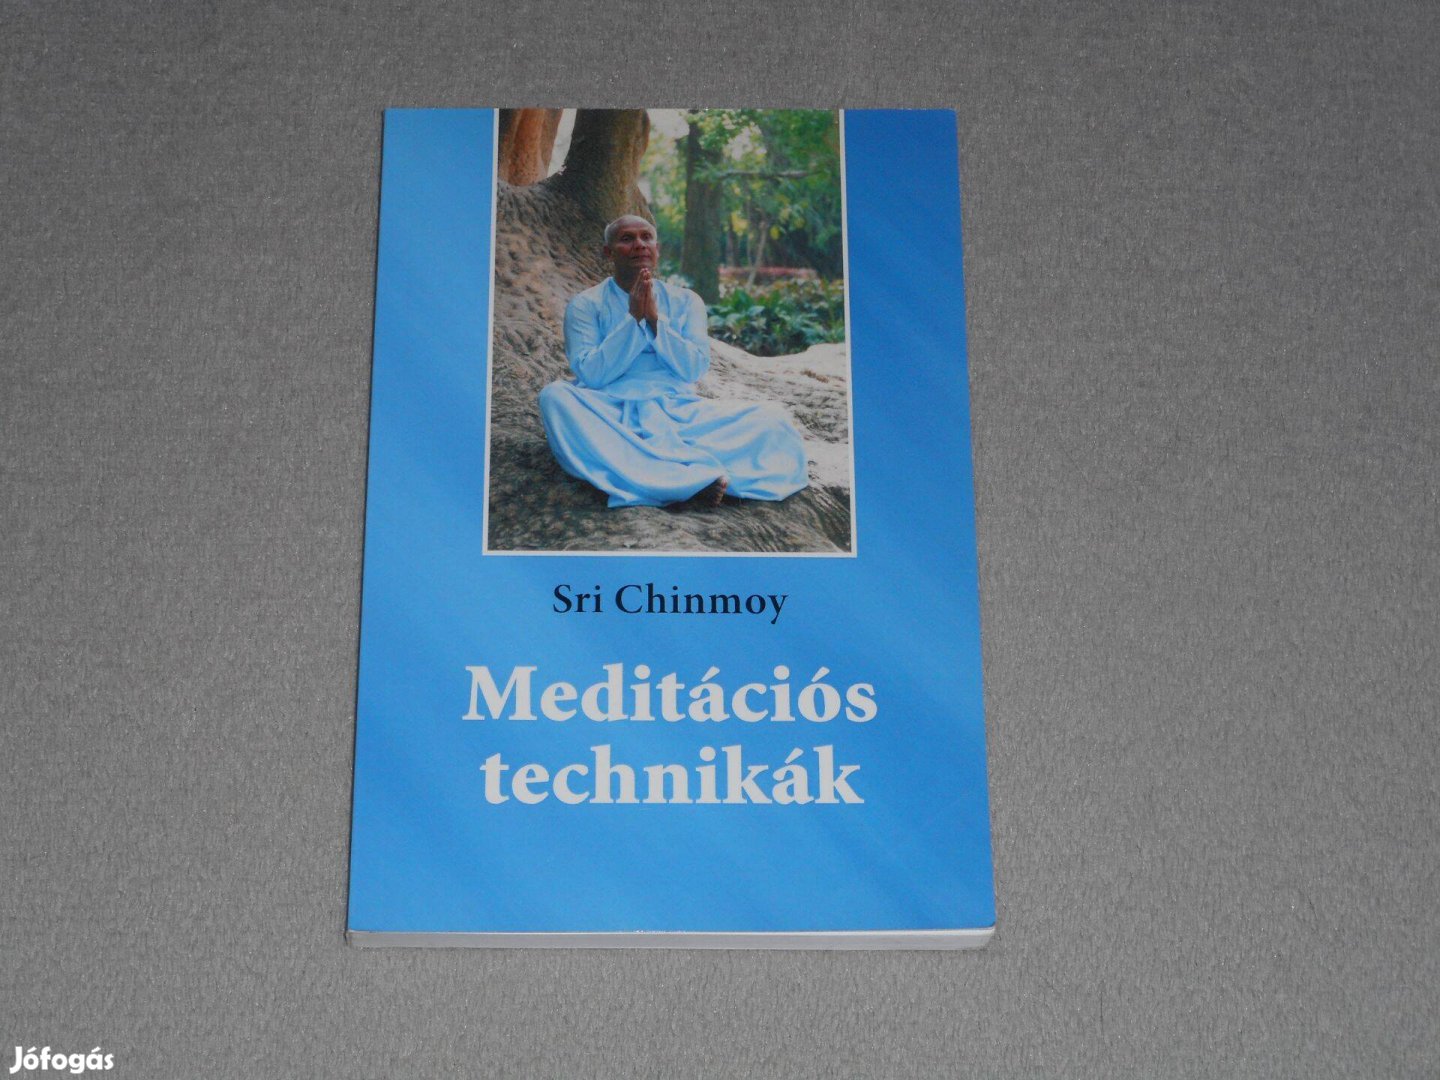 Sri Chinmoy - Meditációs technikák